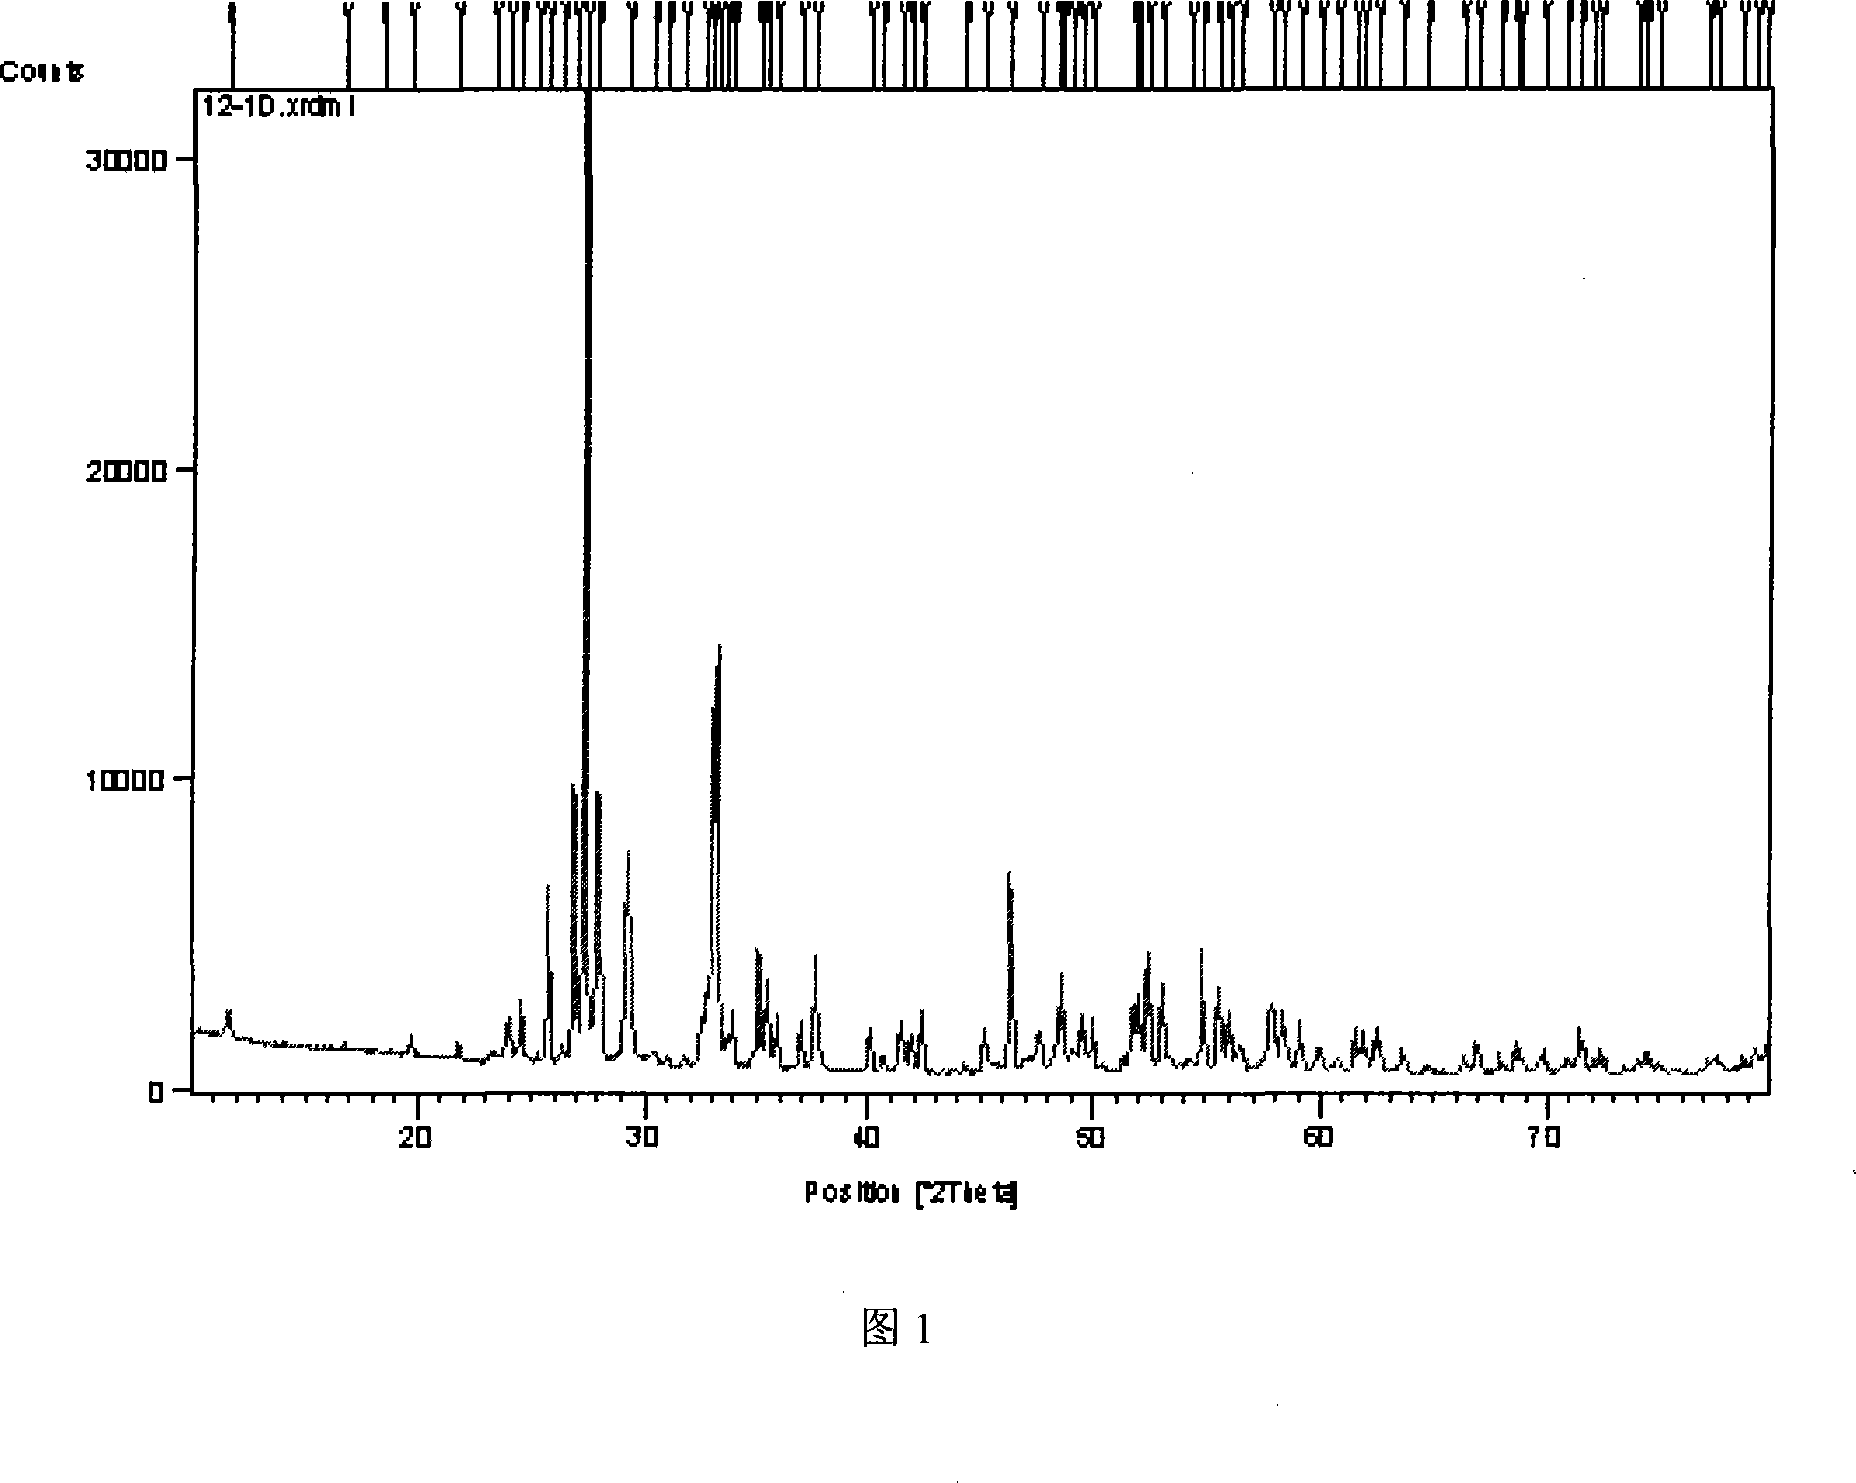 A preparation method of bismuth silicate powder photocatalyst